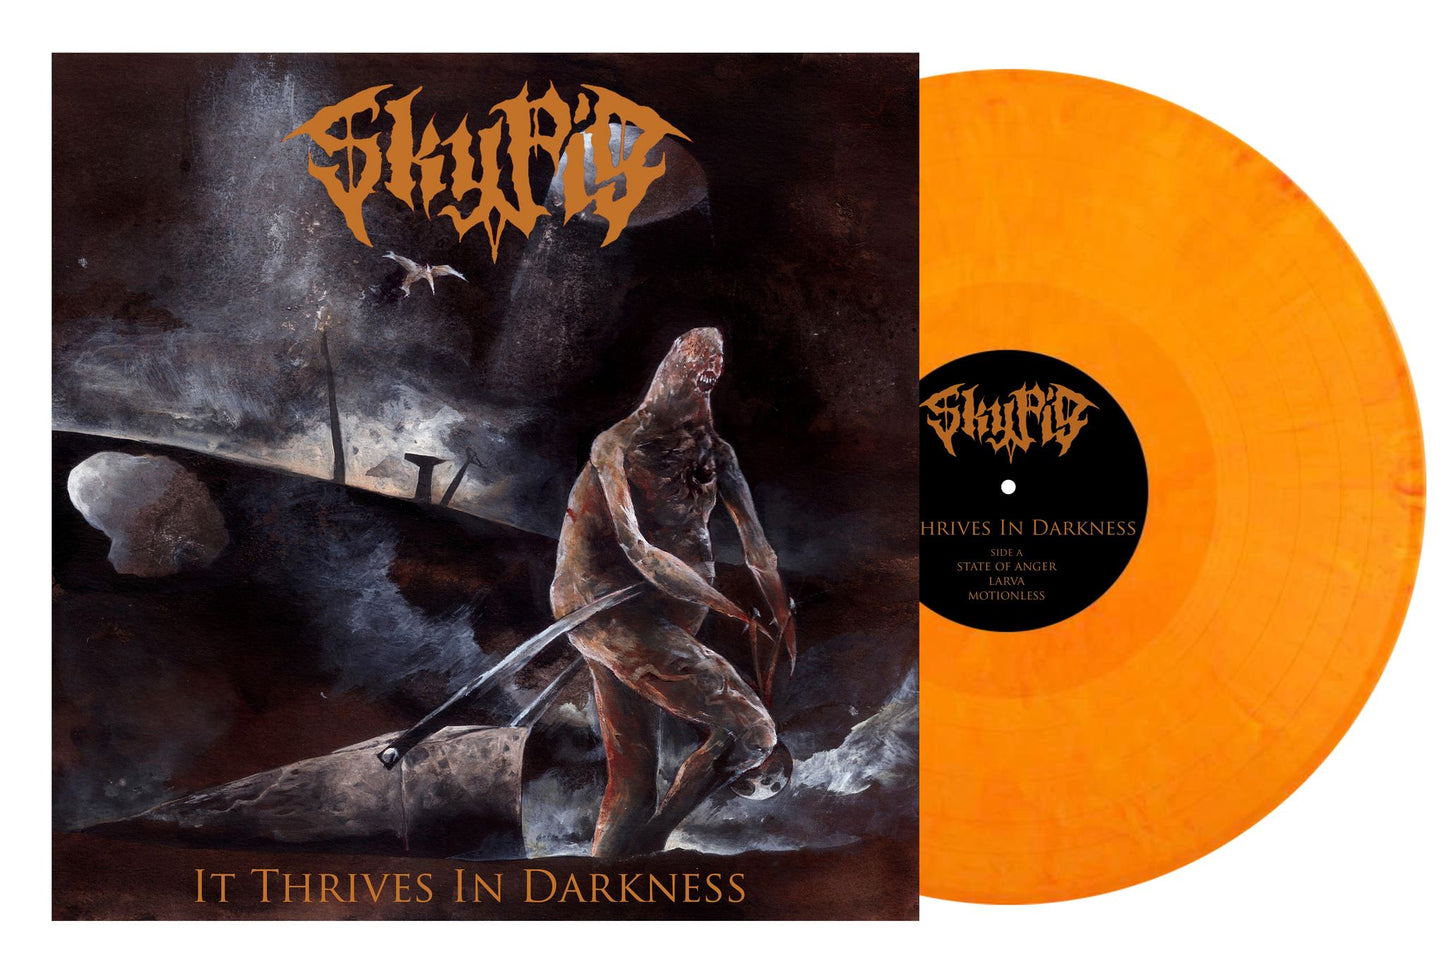 Sky Pig - "It Thrives in Darkness" Orange Vinyl LP Pre-Order